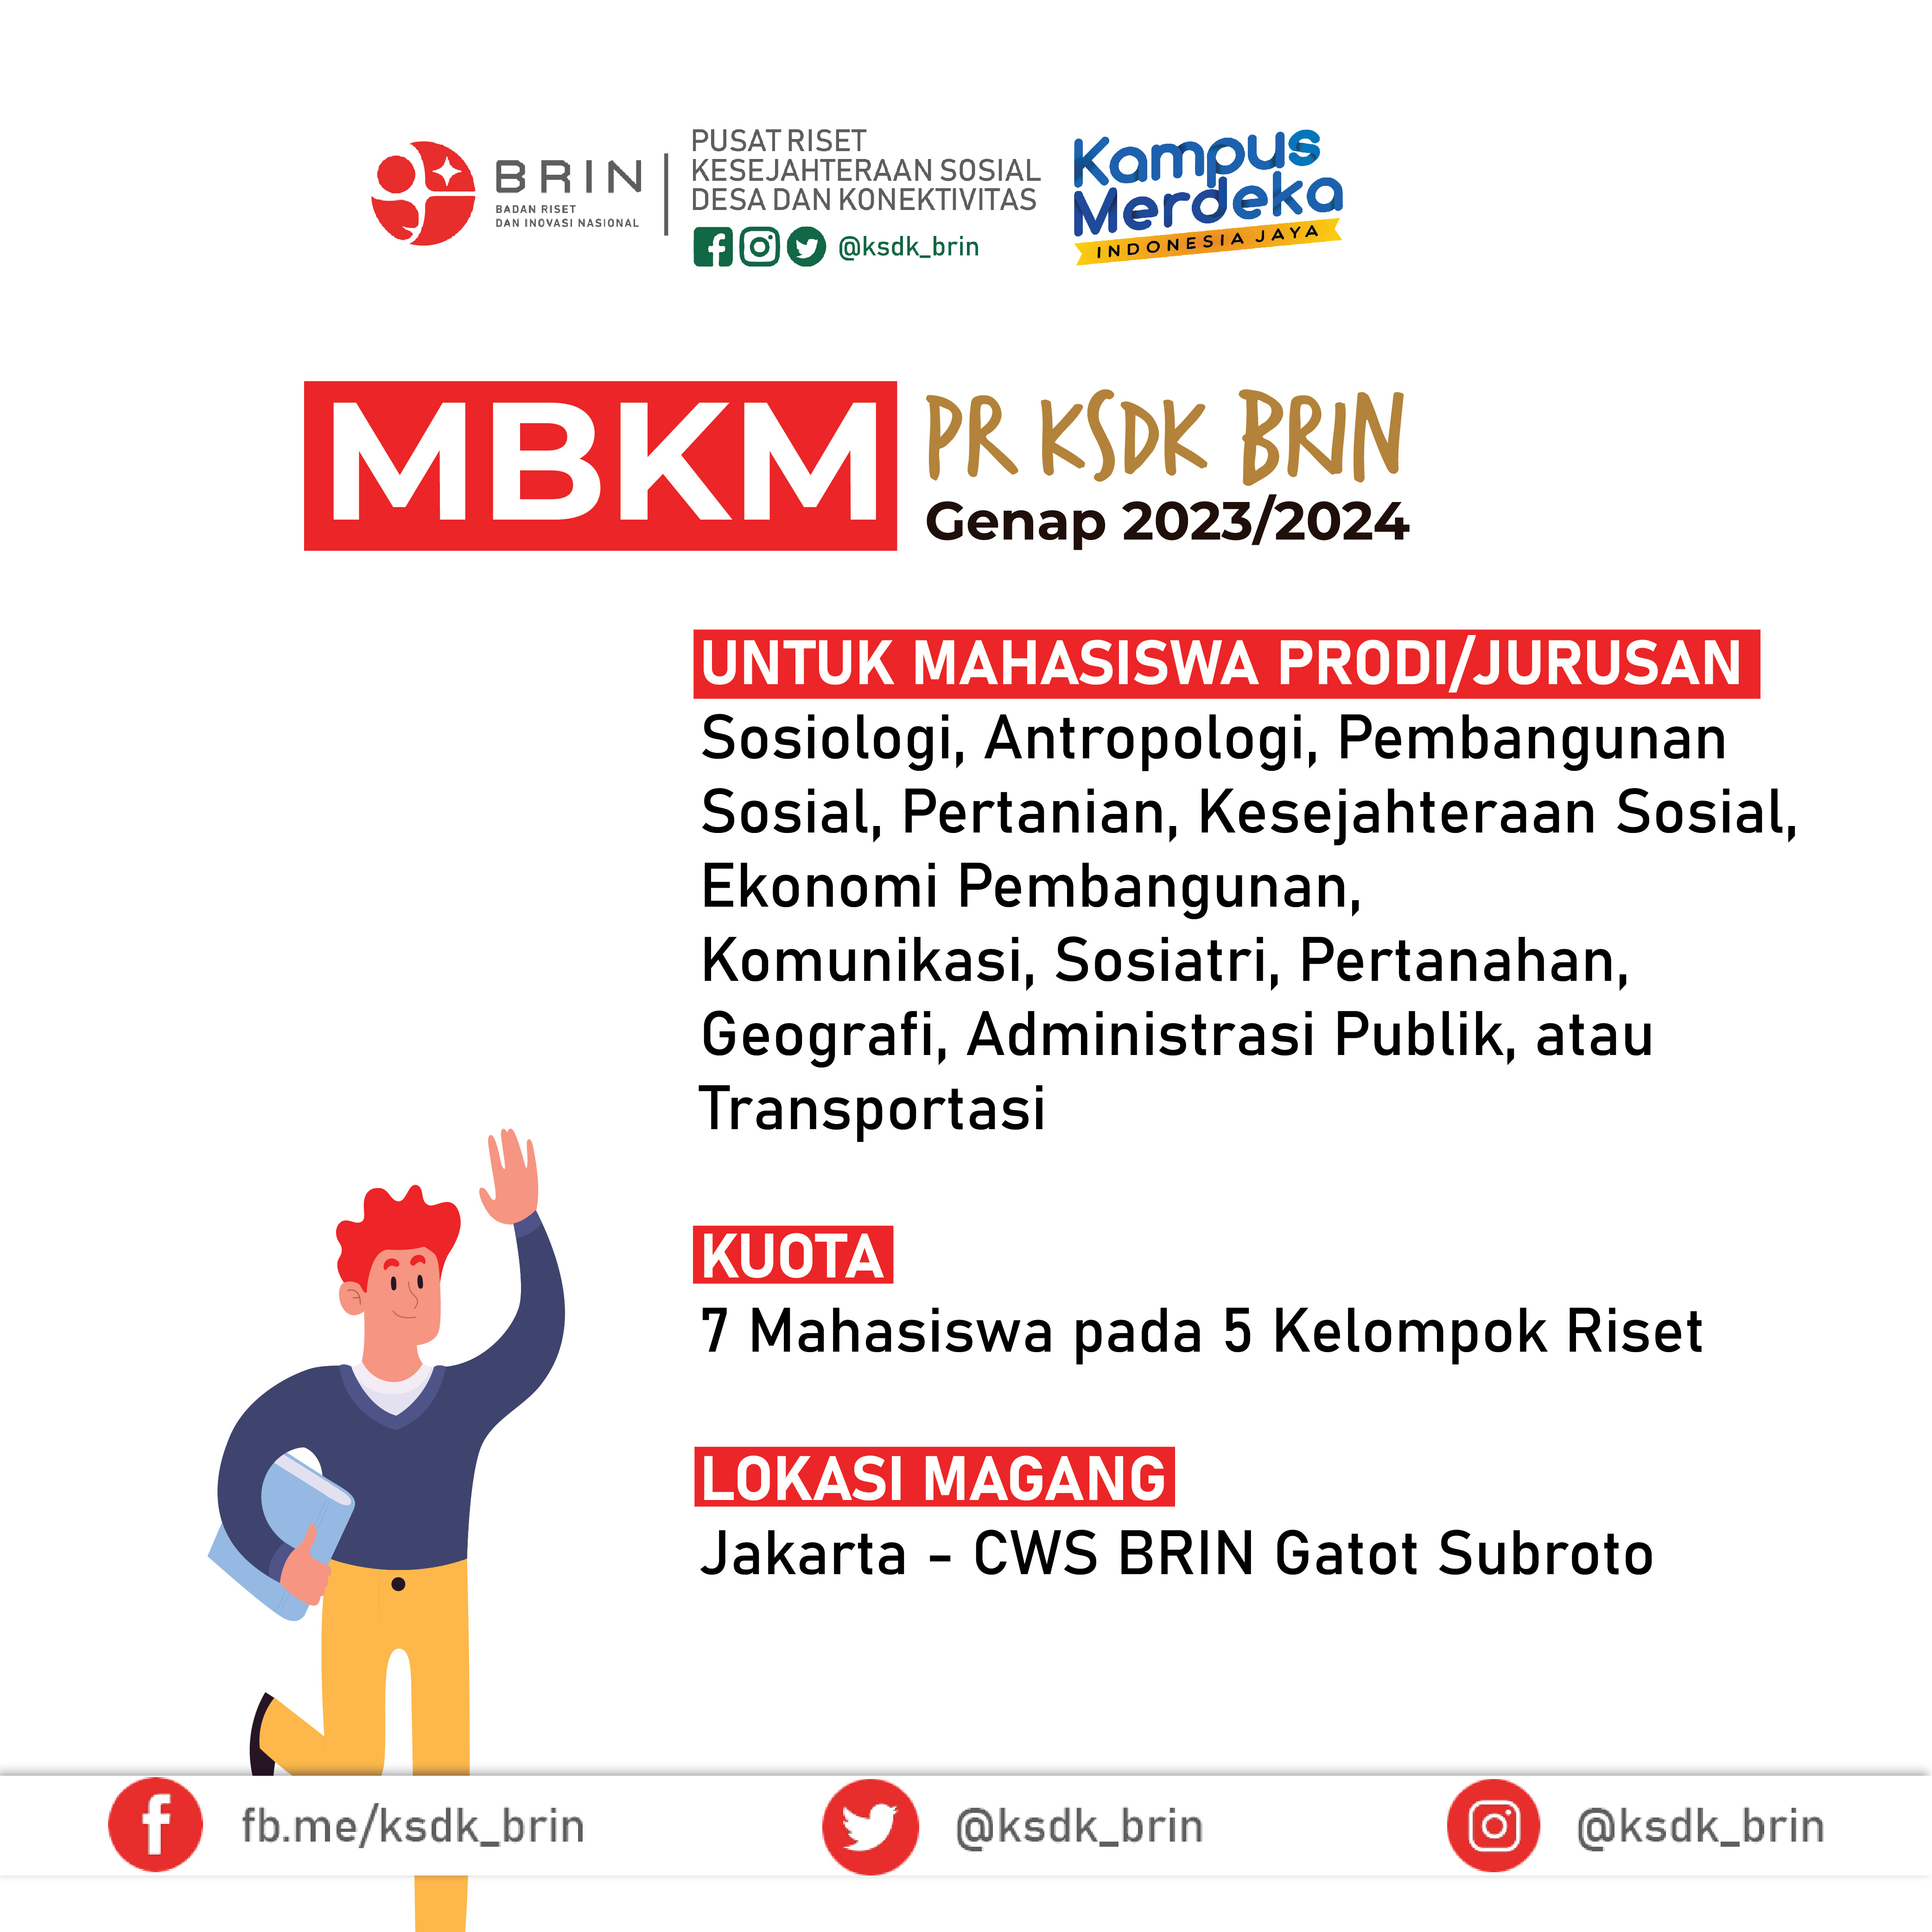 PR KSDK BRIN|Pemanfaatan Teknologi Inovasi Pengetahuan Lokal | Magang/Praktek Kerja (Non Riset) - Jakarta (Gatot Subroto) 